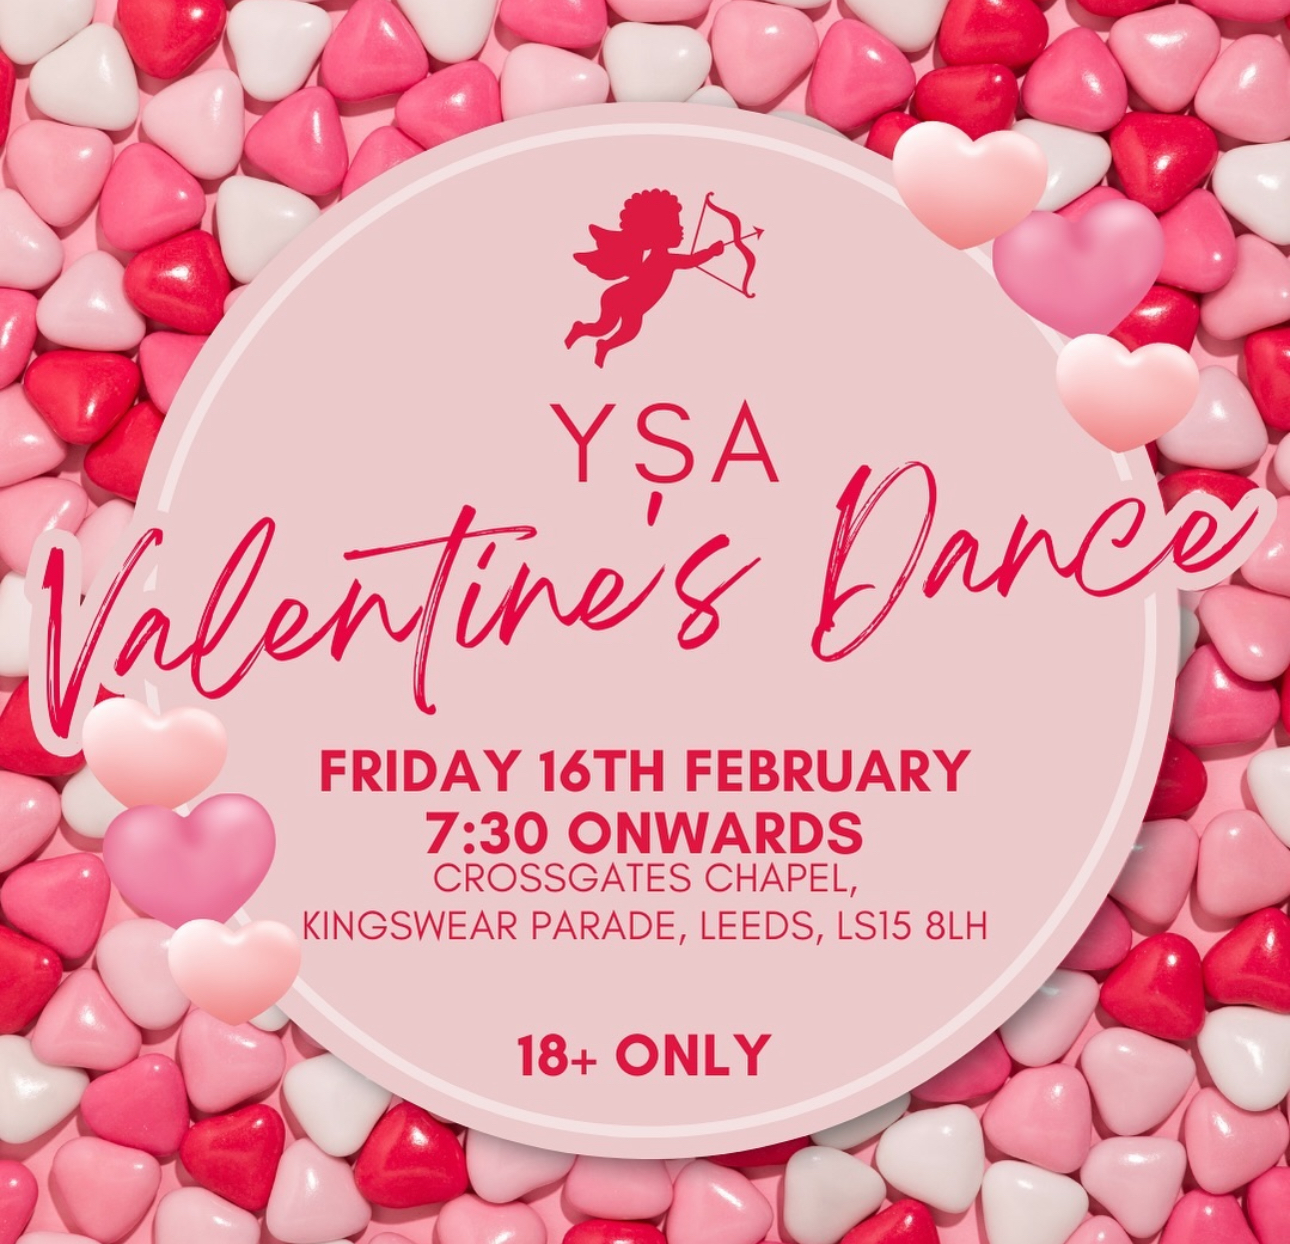 YSA Valentines dance